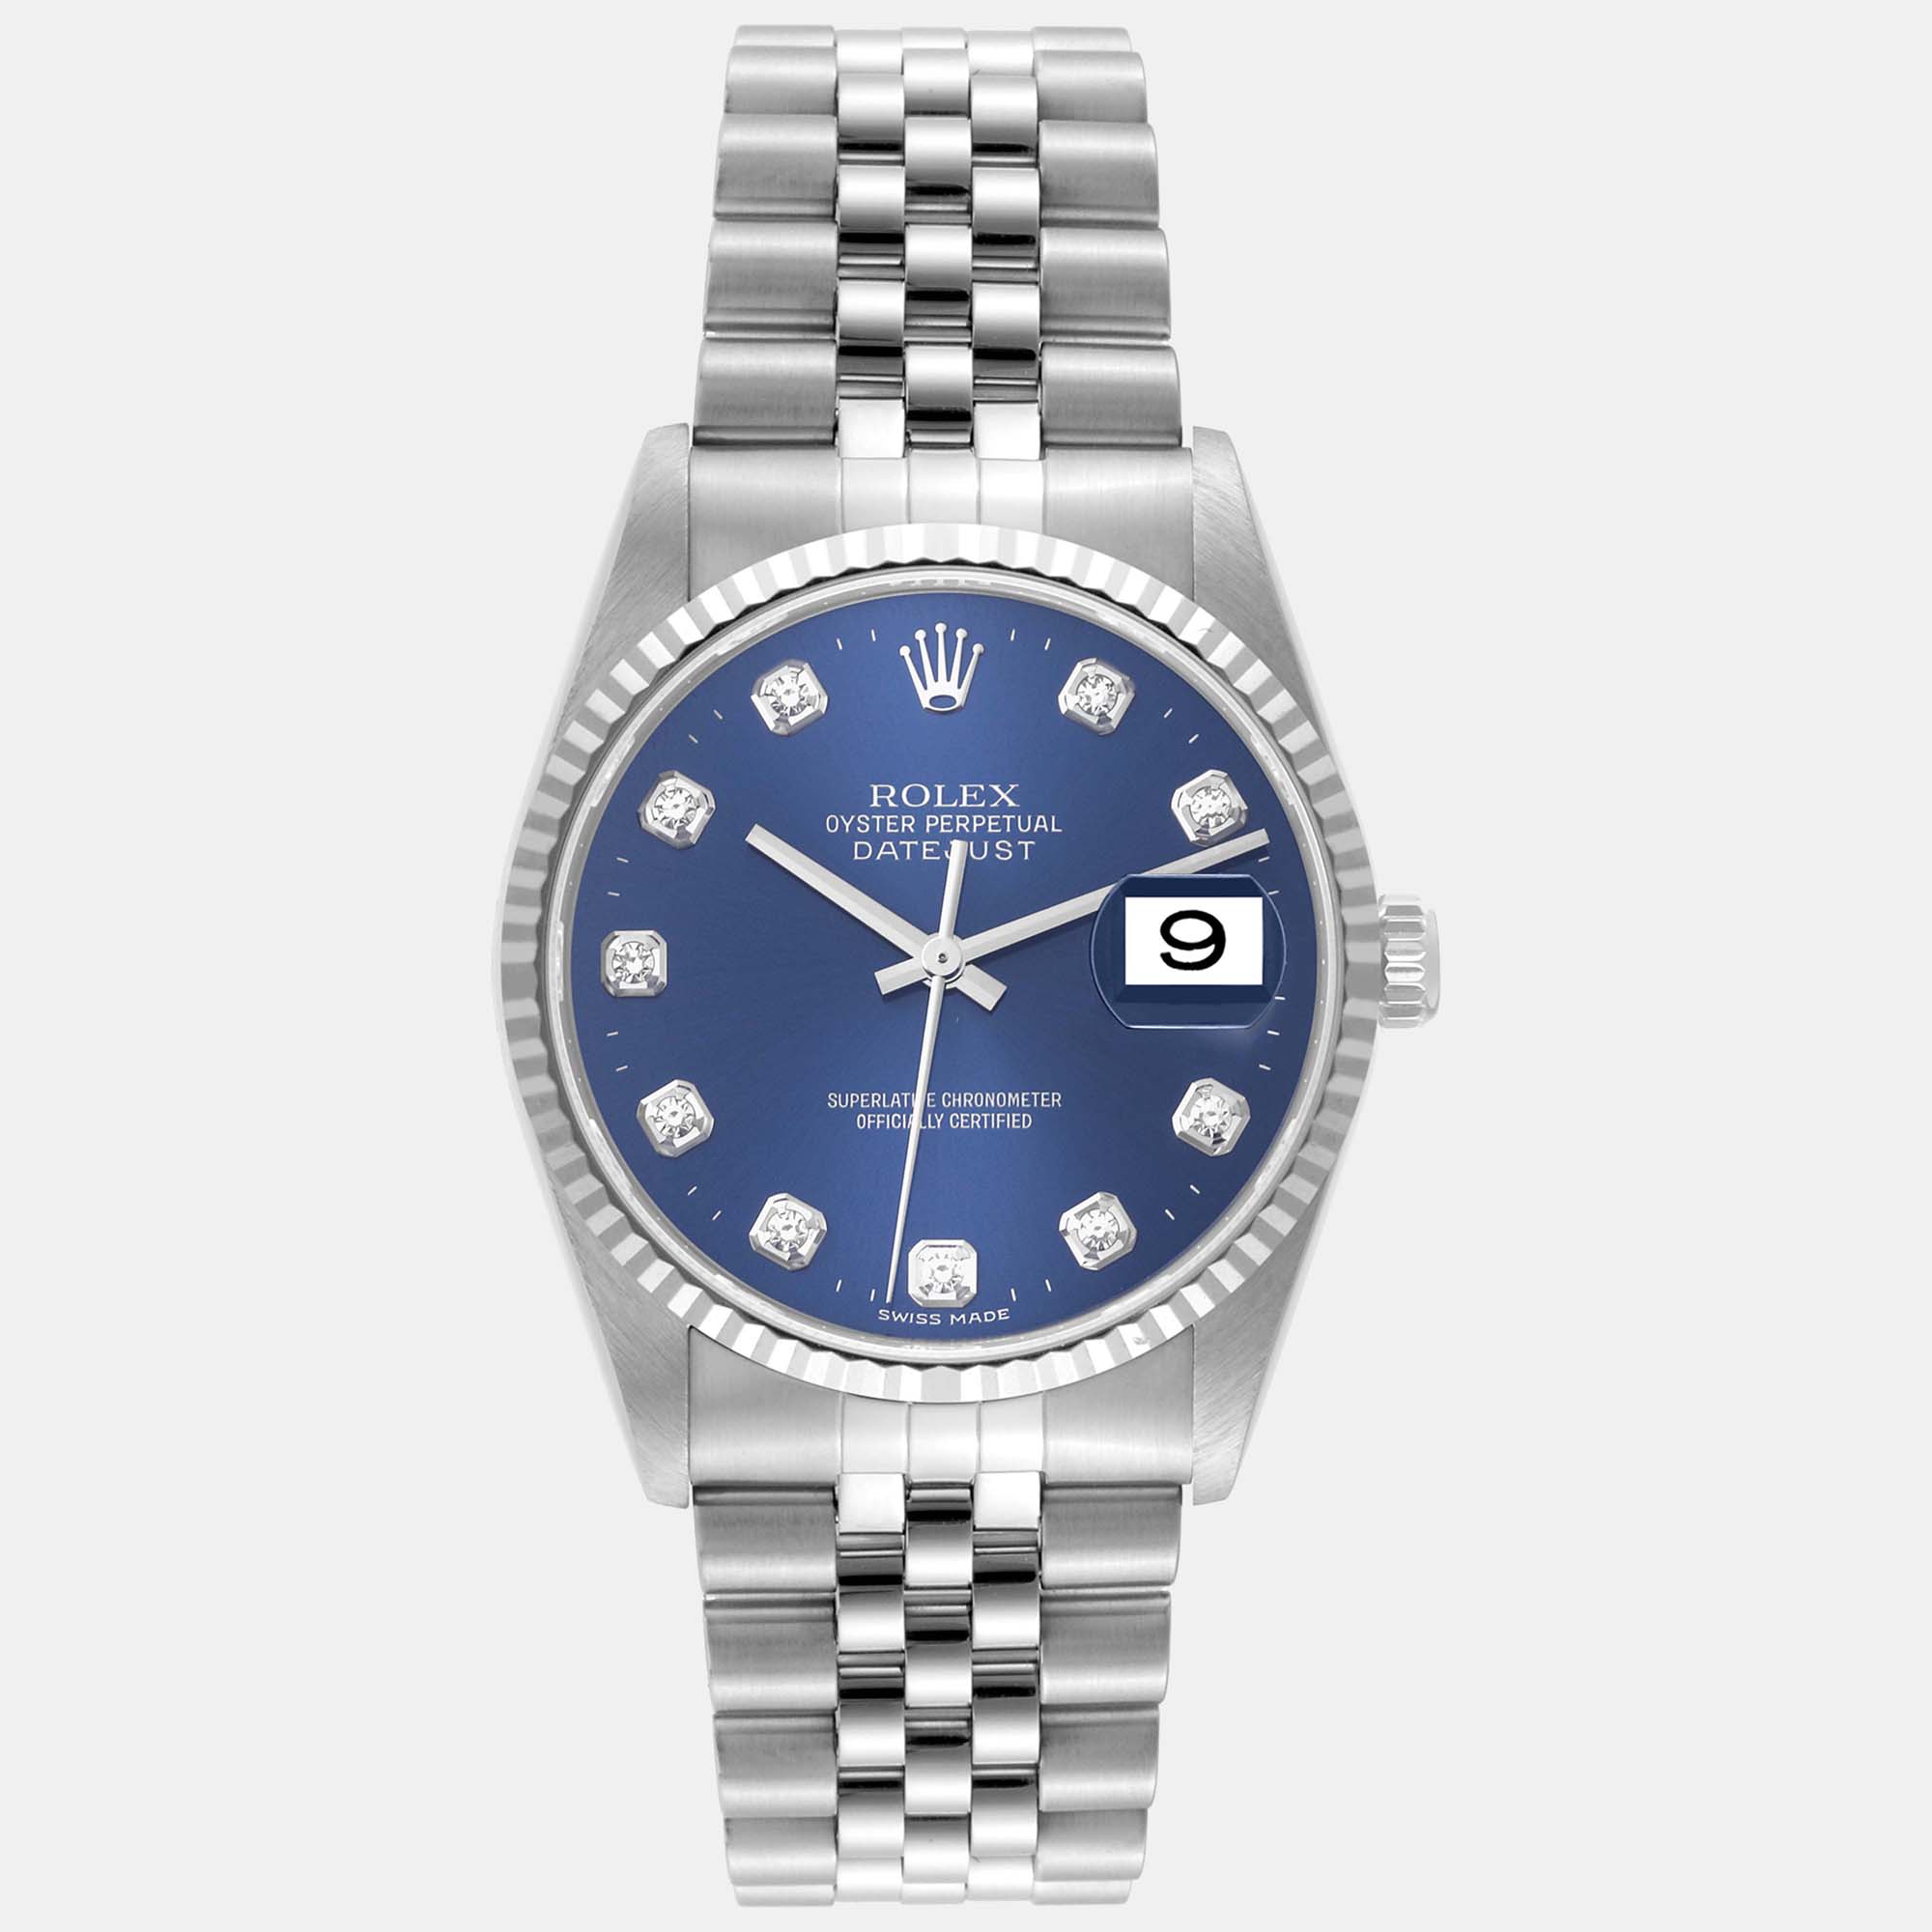 Rolex datejust blue diamond dial steel white gold men's watch 36 mm